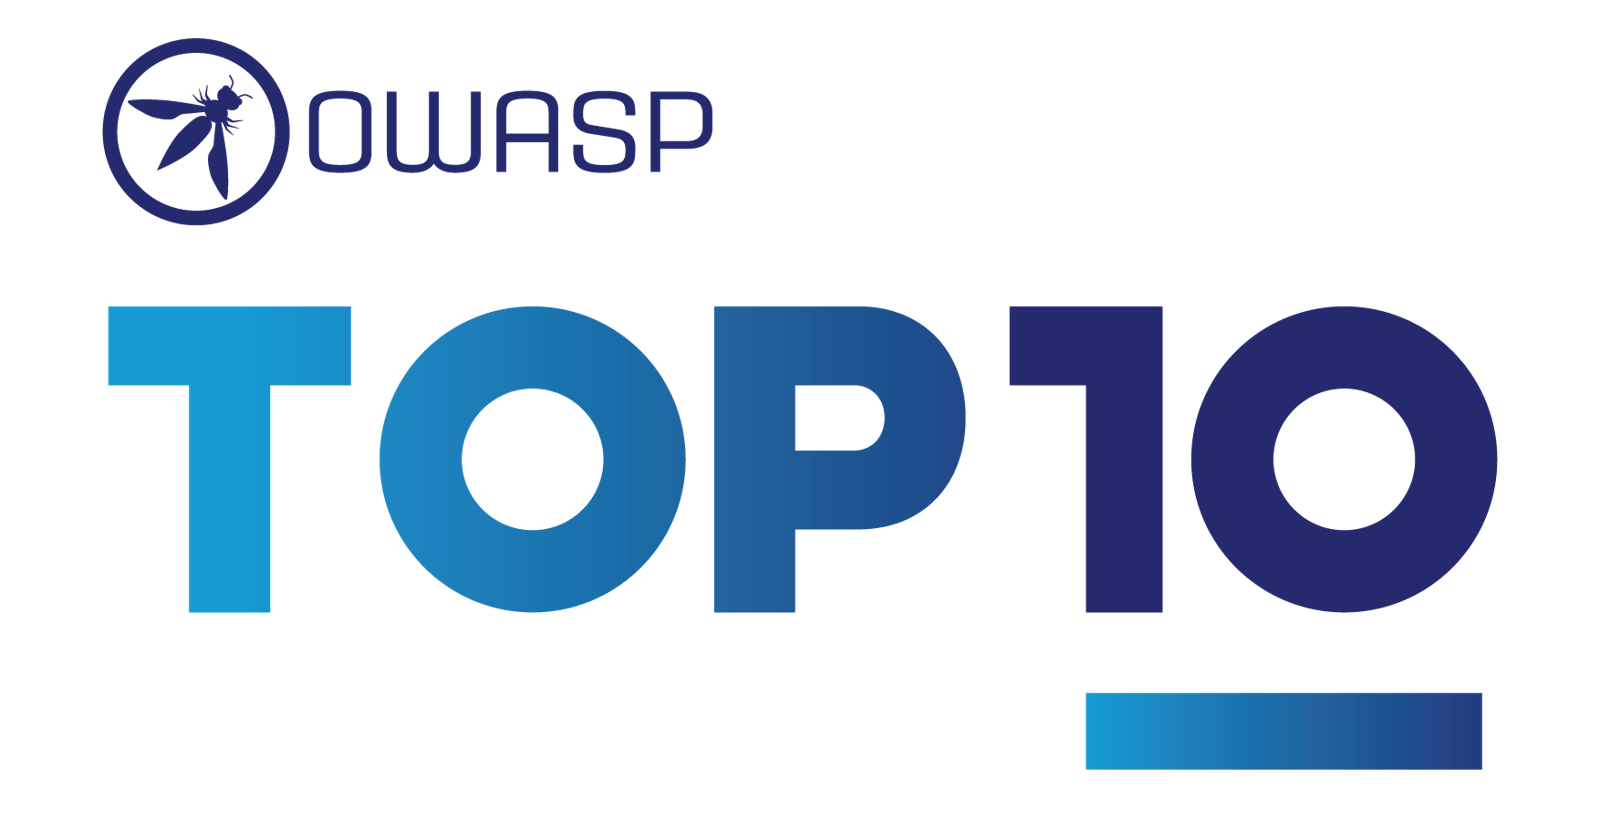 OWASP Top 10 Security Vulnerabilities